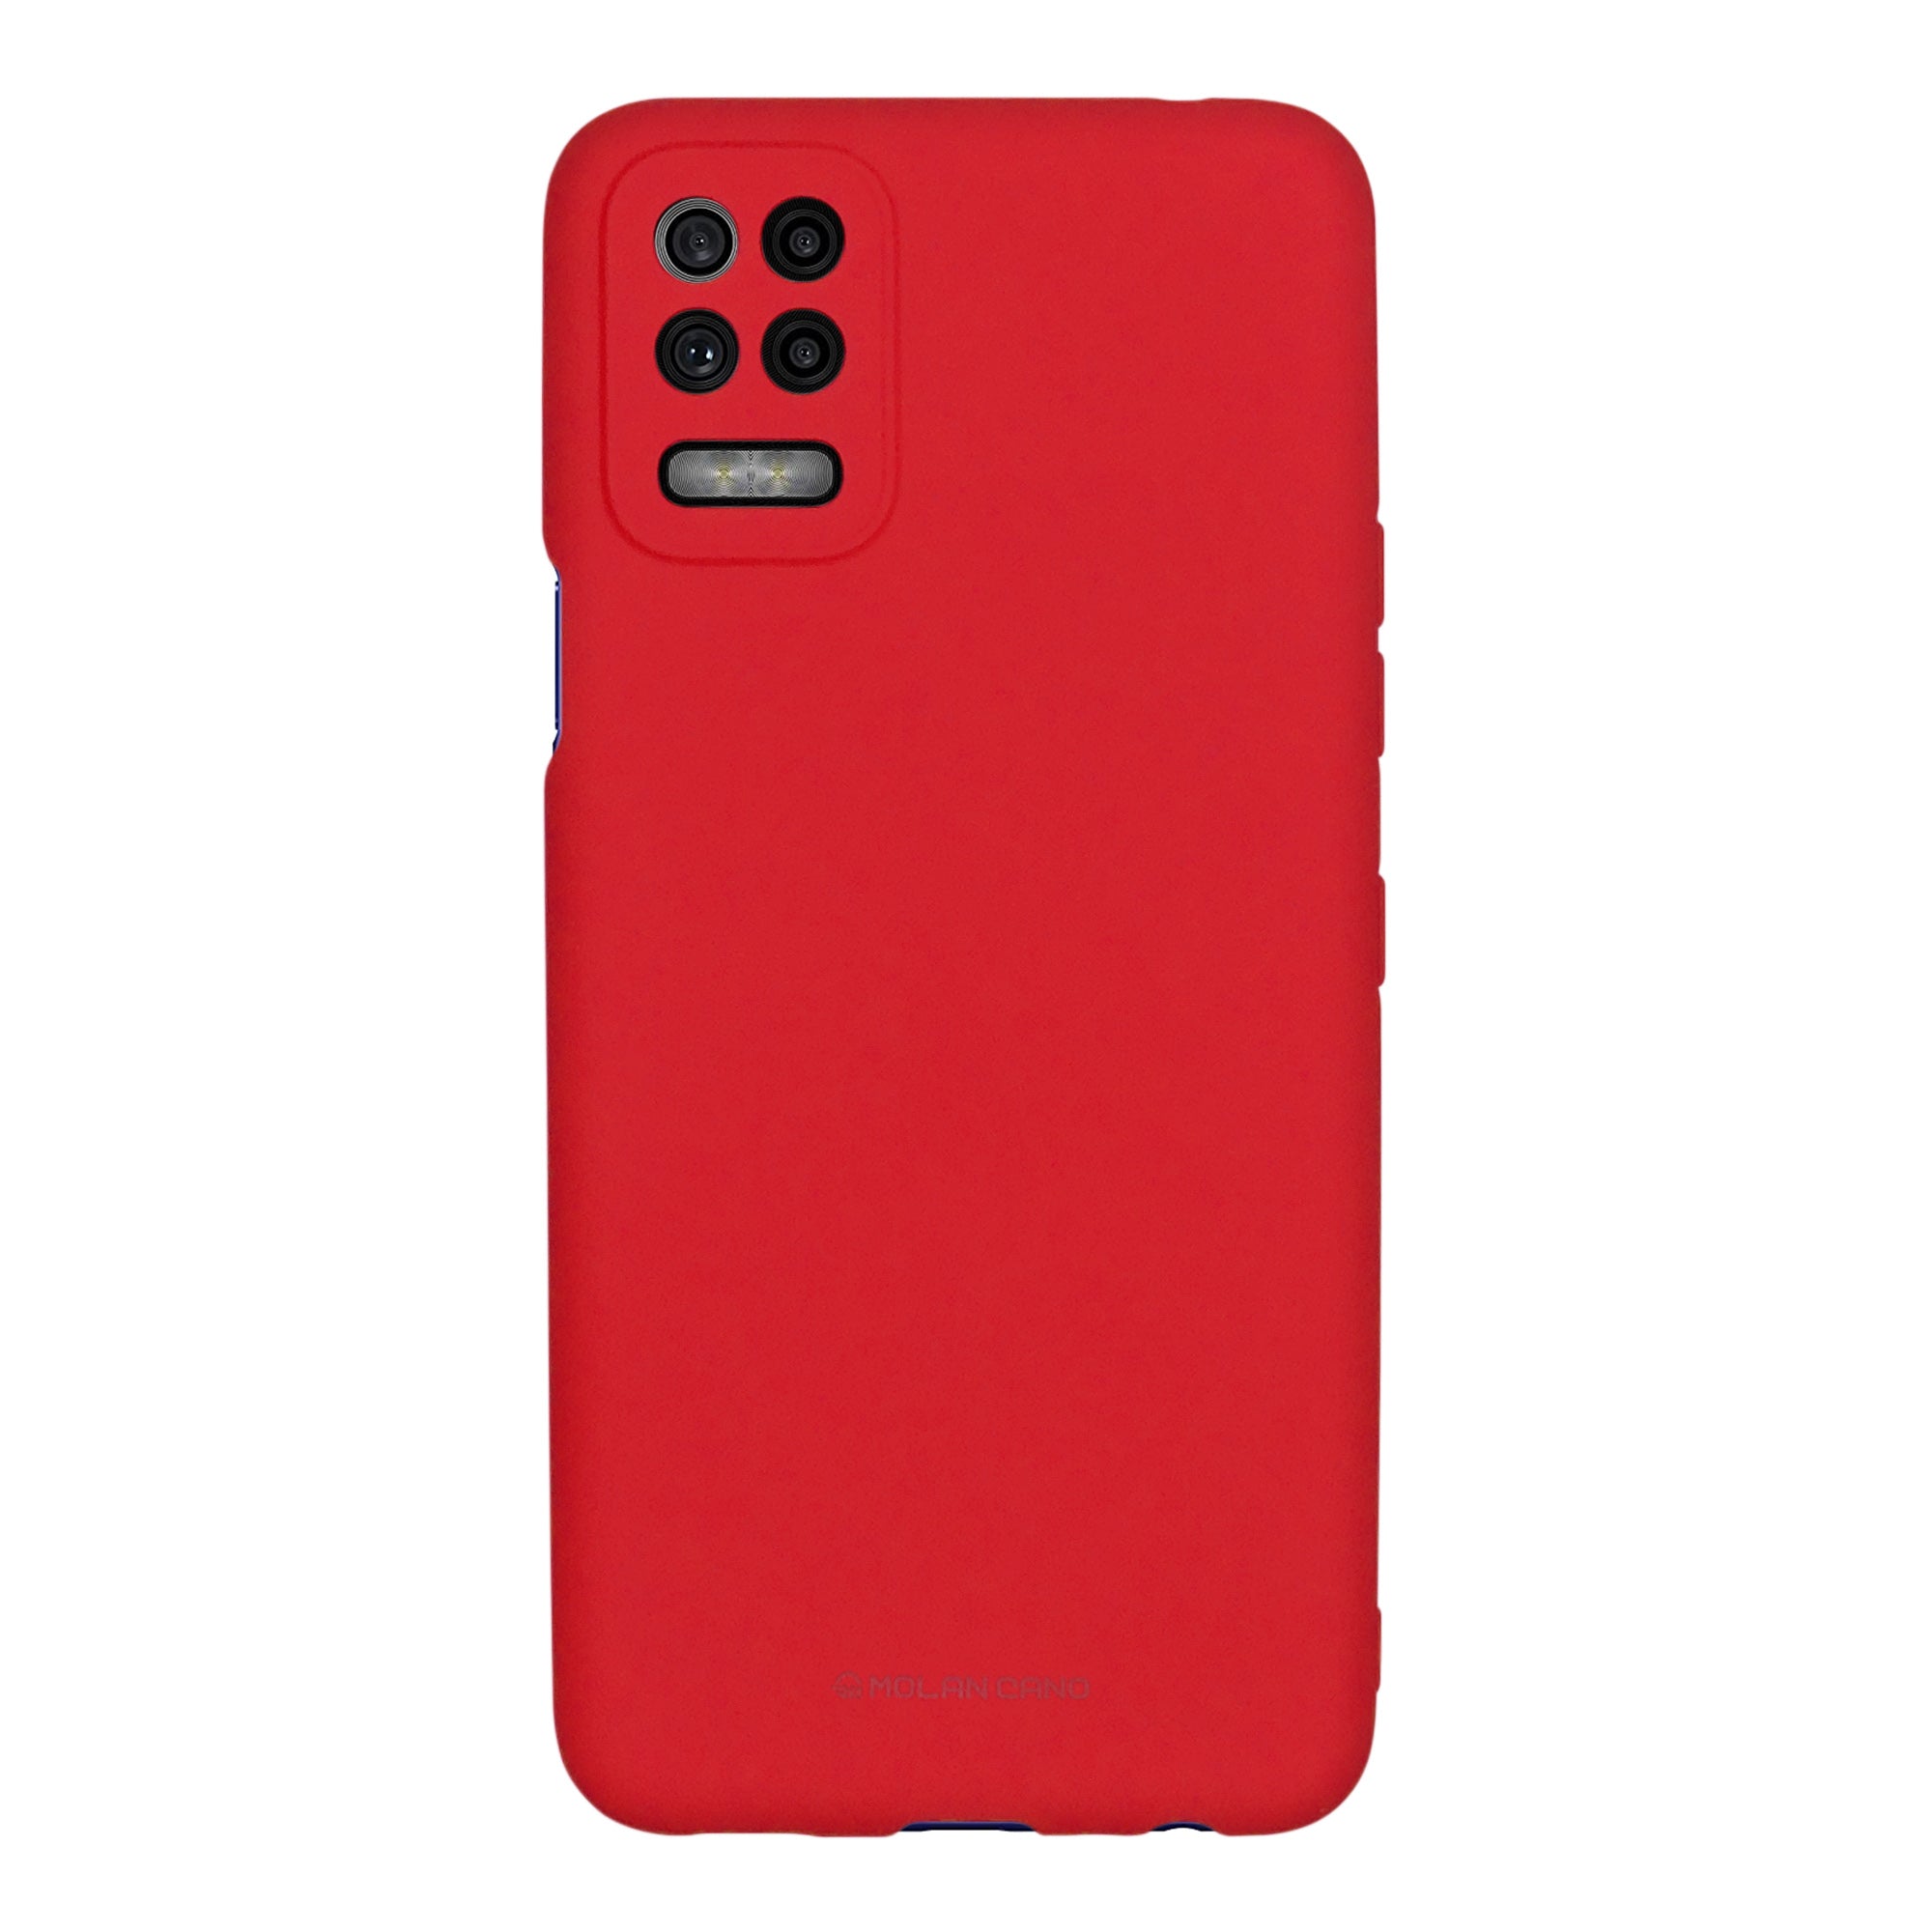 Funda Molan Cano Soft Jelly Case para Xiaomi Redmi 10 color Rojo